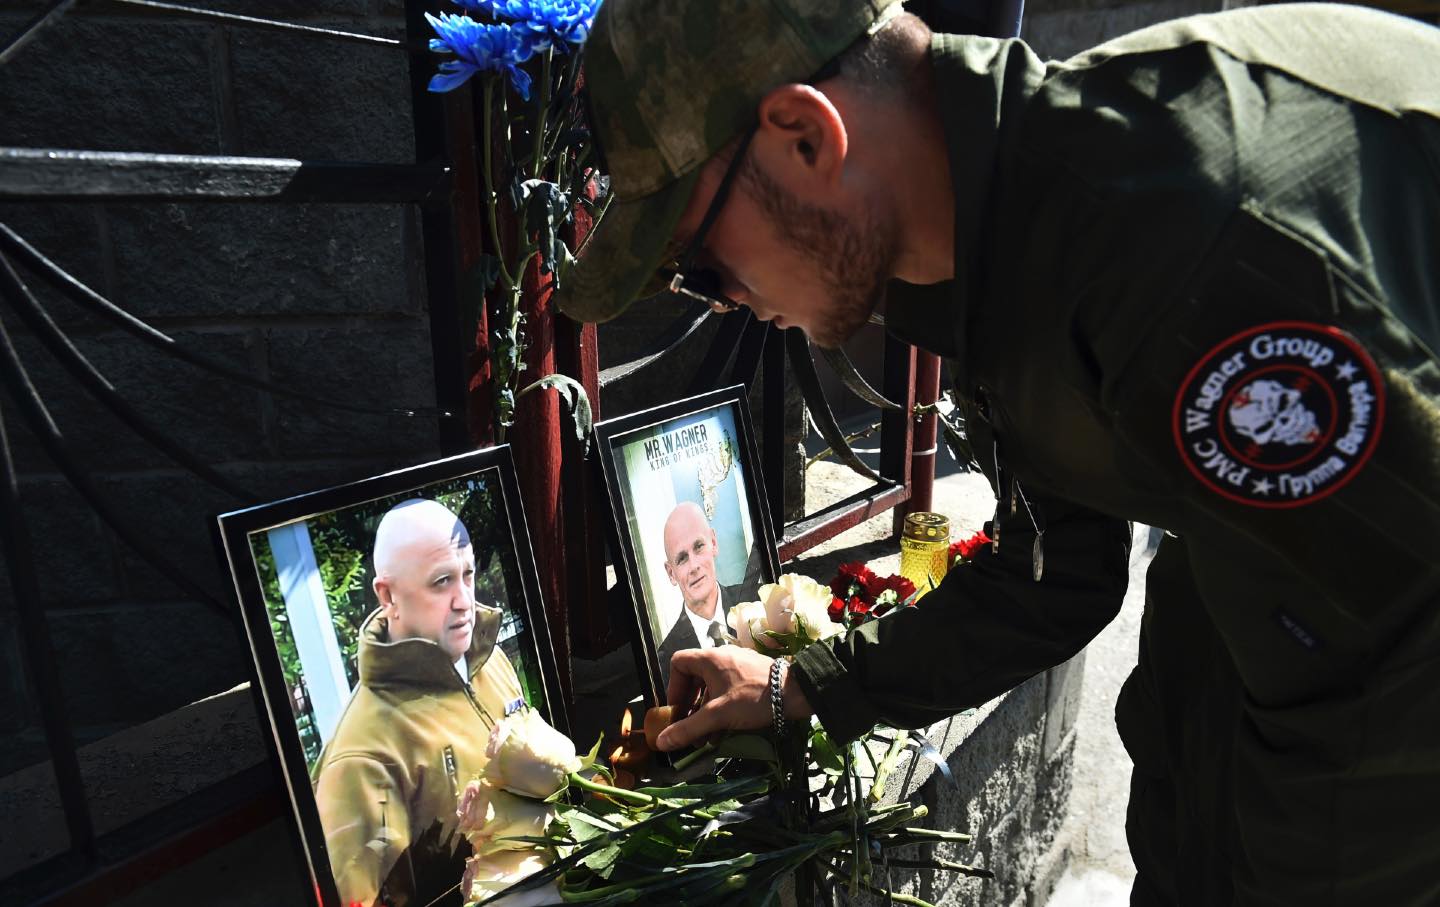 wagner mercenary group soldier at memorial for yevgeny priogzhin